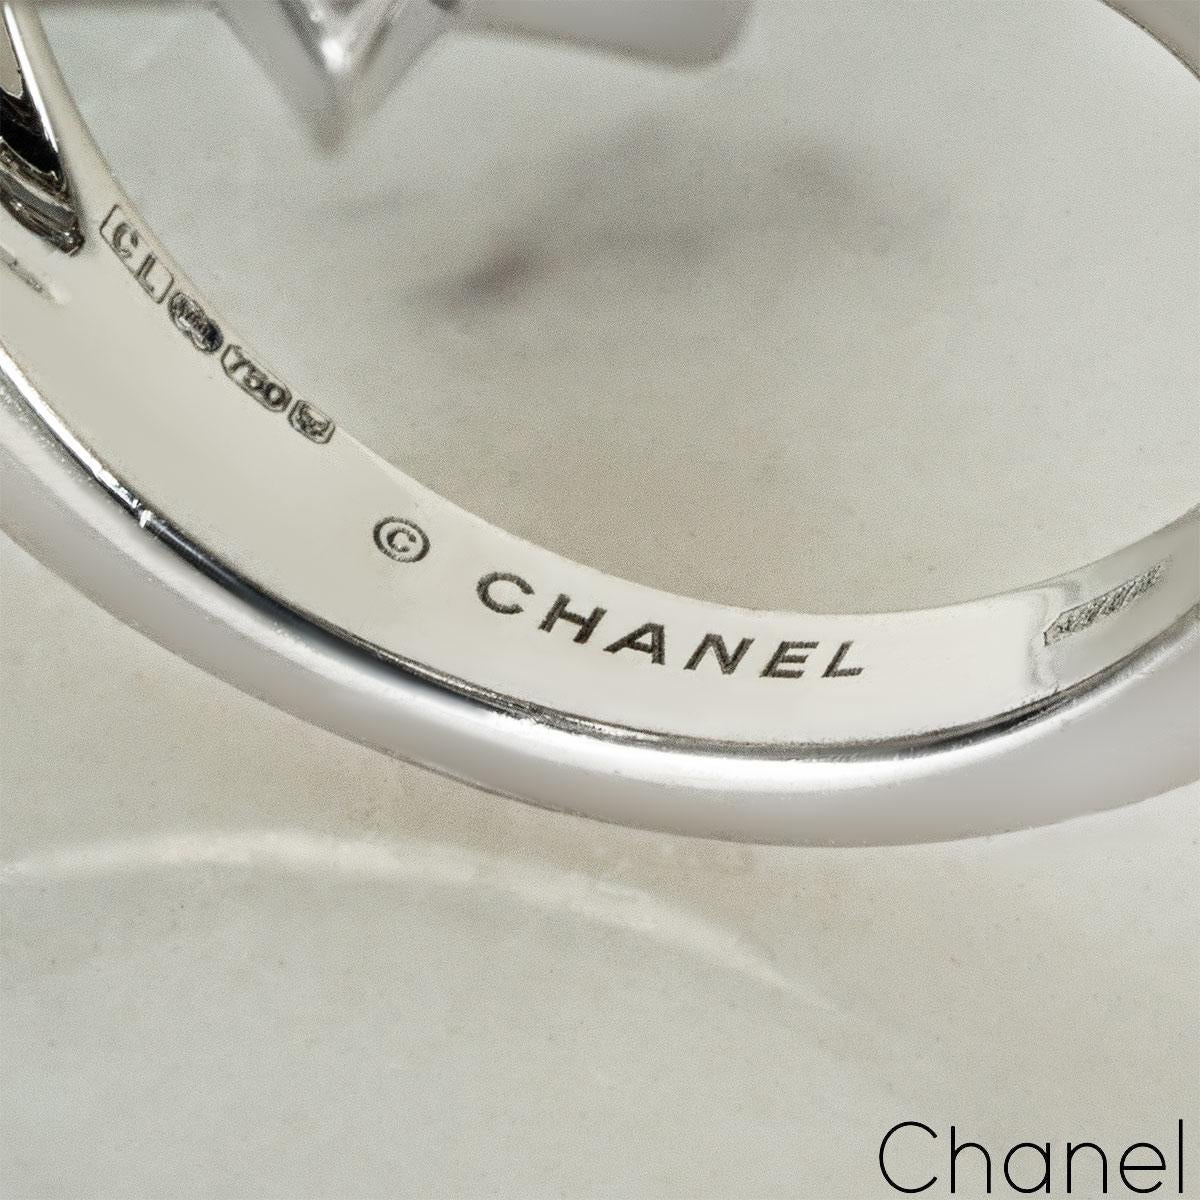 Chanel White Gold Diamond Comete Geode Ring J0387 2